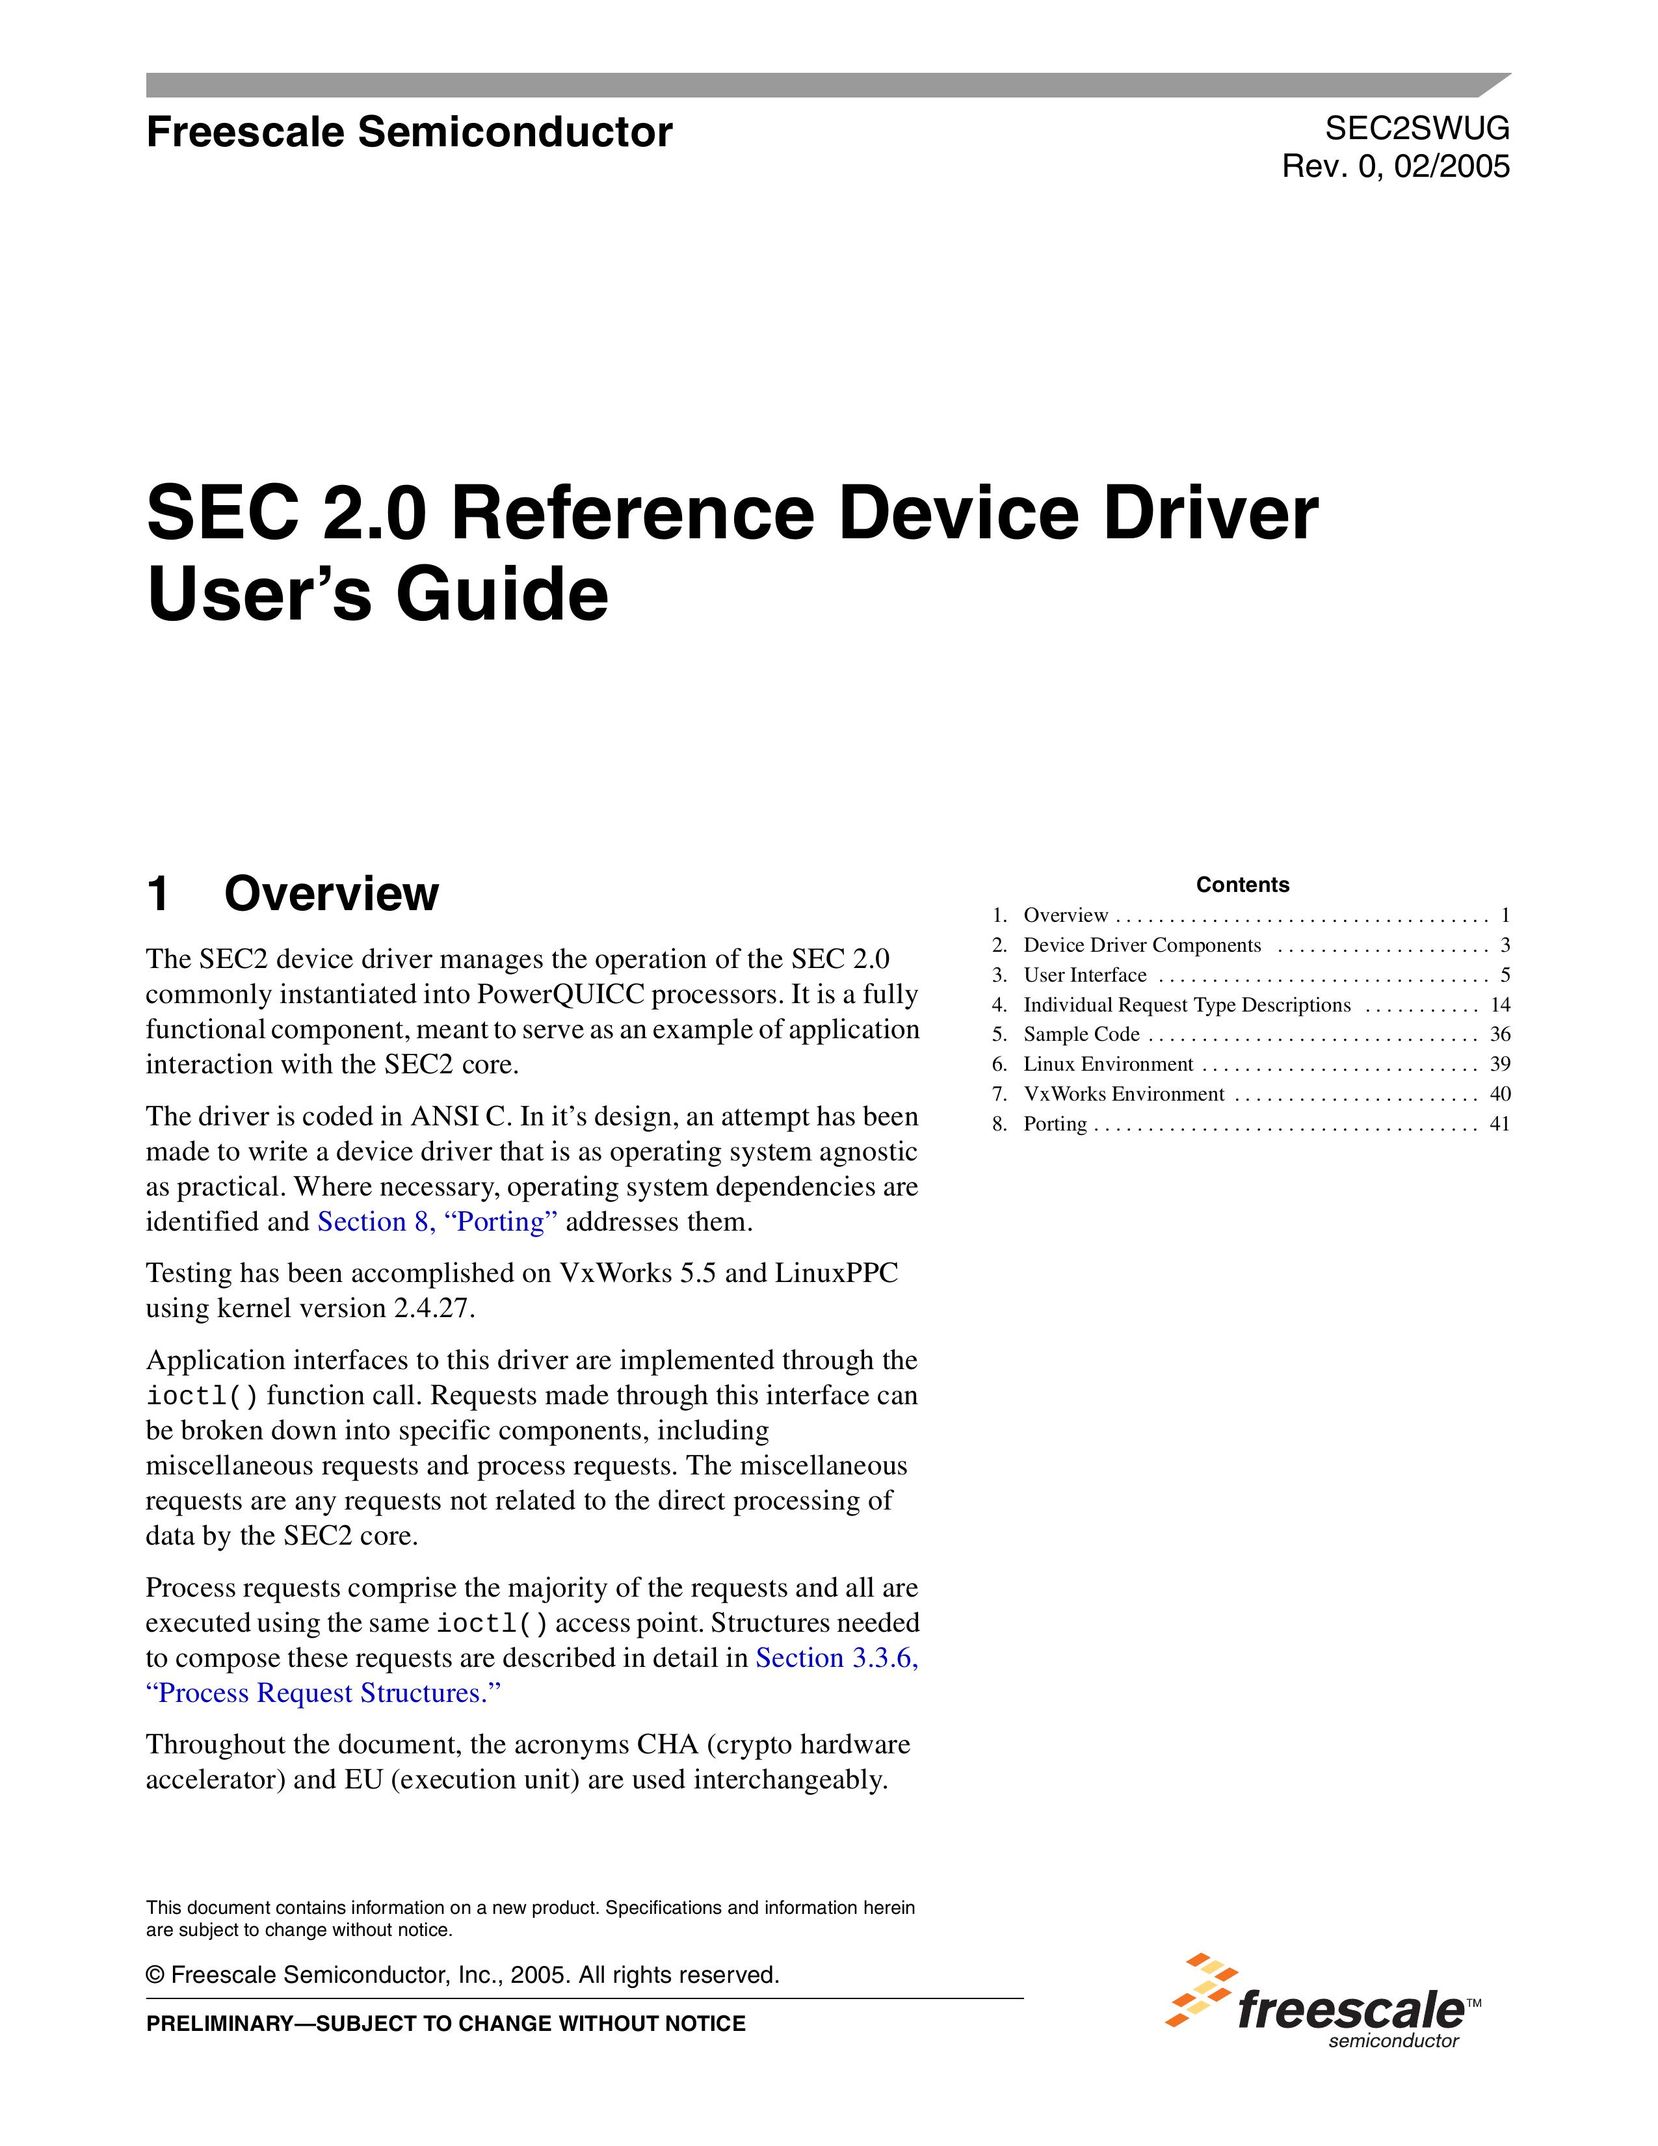 Freescale Semiconductor SEC2SWUG Network Card User Manual